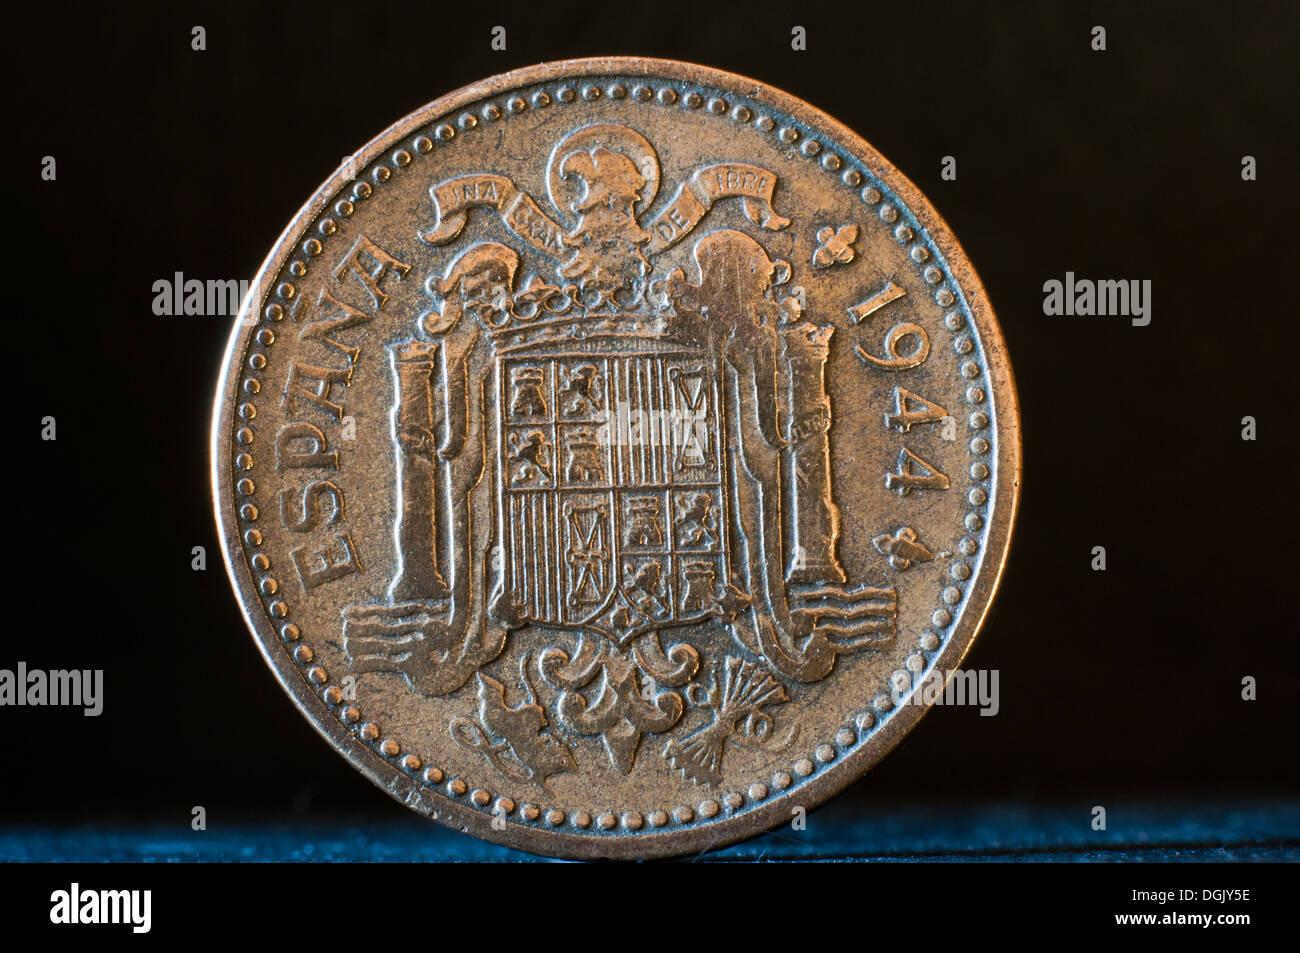 1944 Spain coin Stock Photo